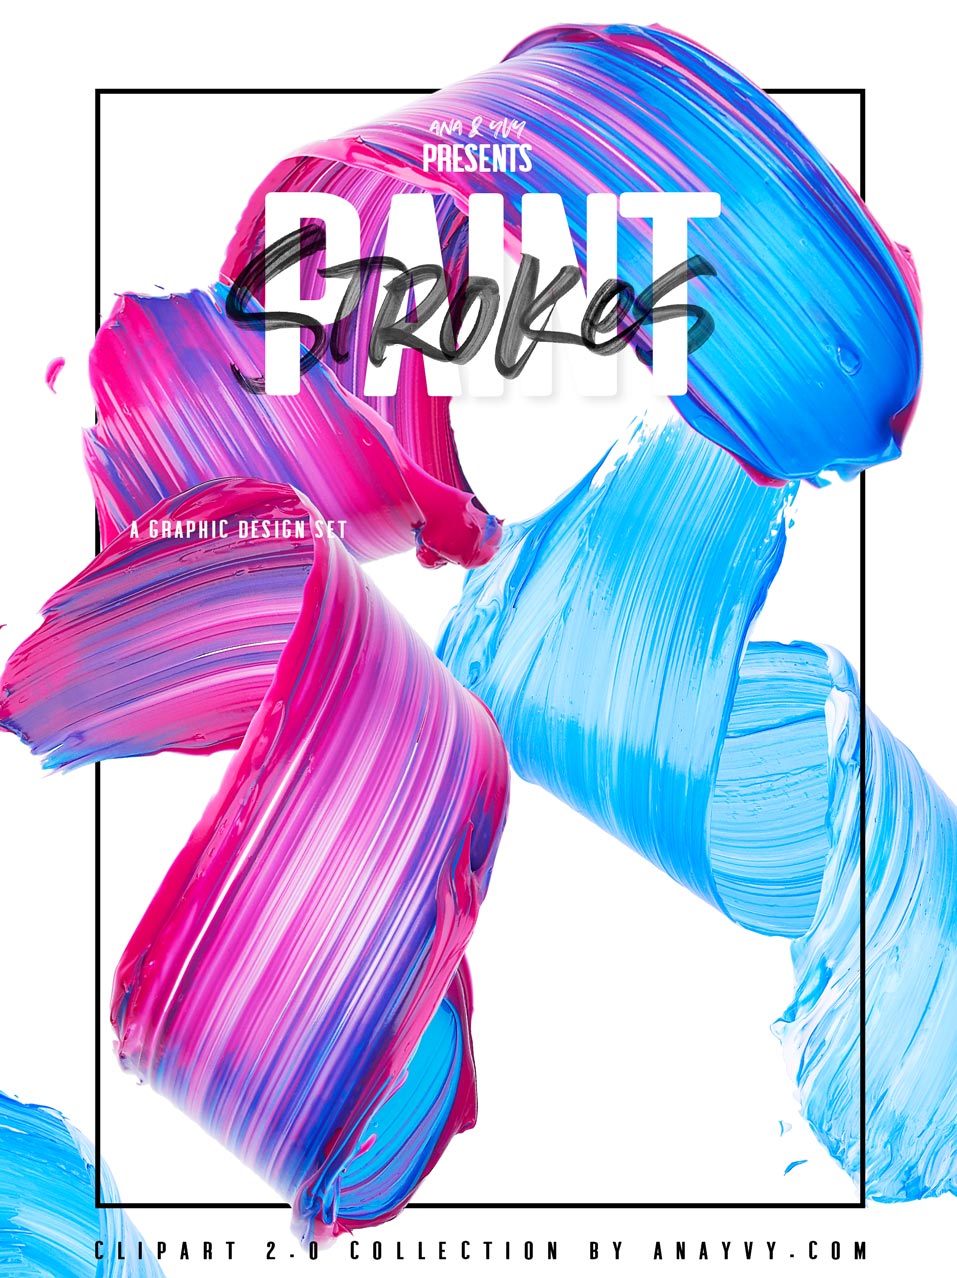 Clipart | Acrylic Paint Curls - ANA & YVY